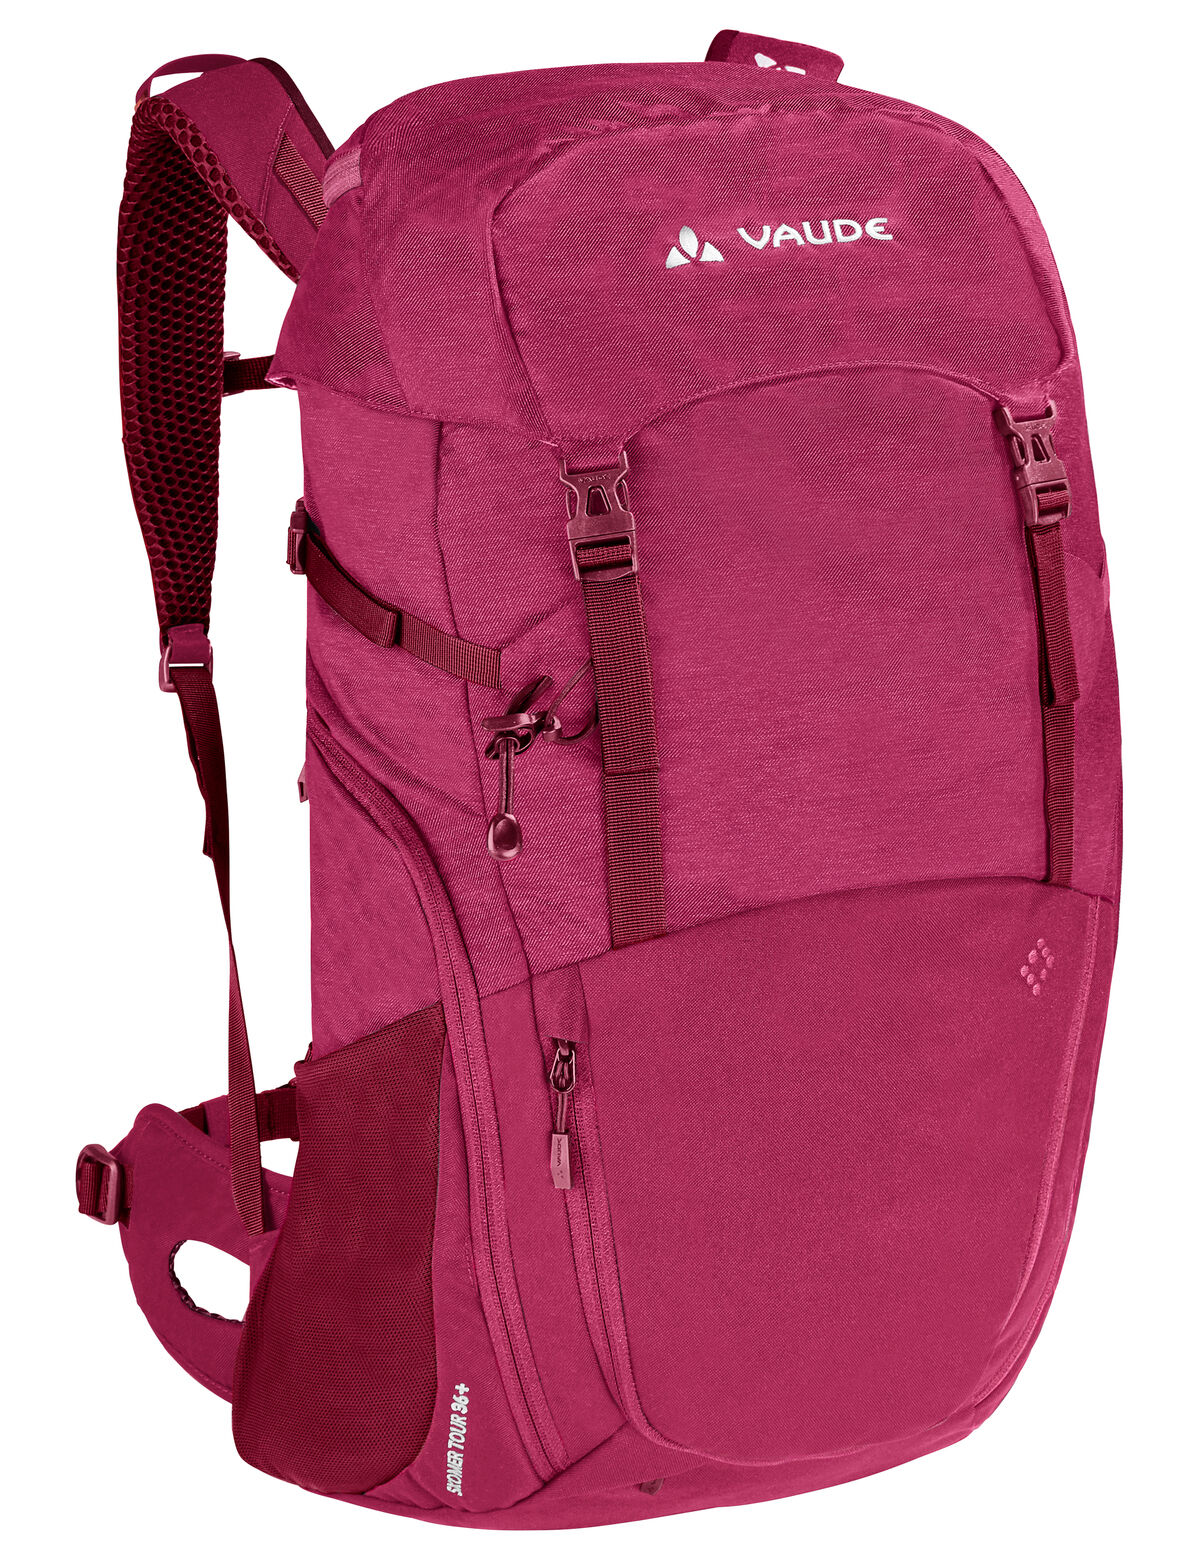 Vaude - Skomer Tour 36+ - Hiking backpack - Women's